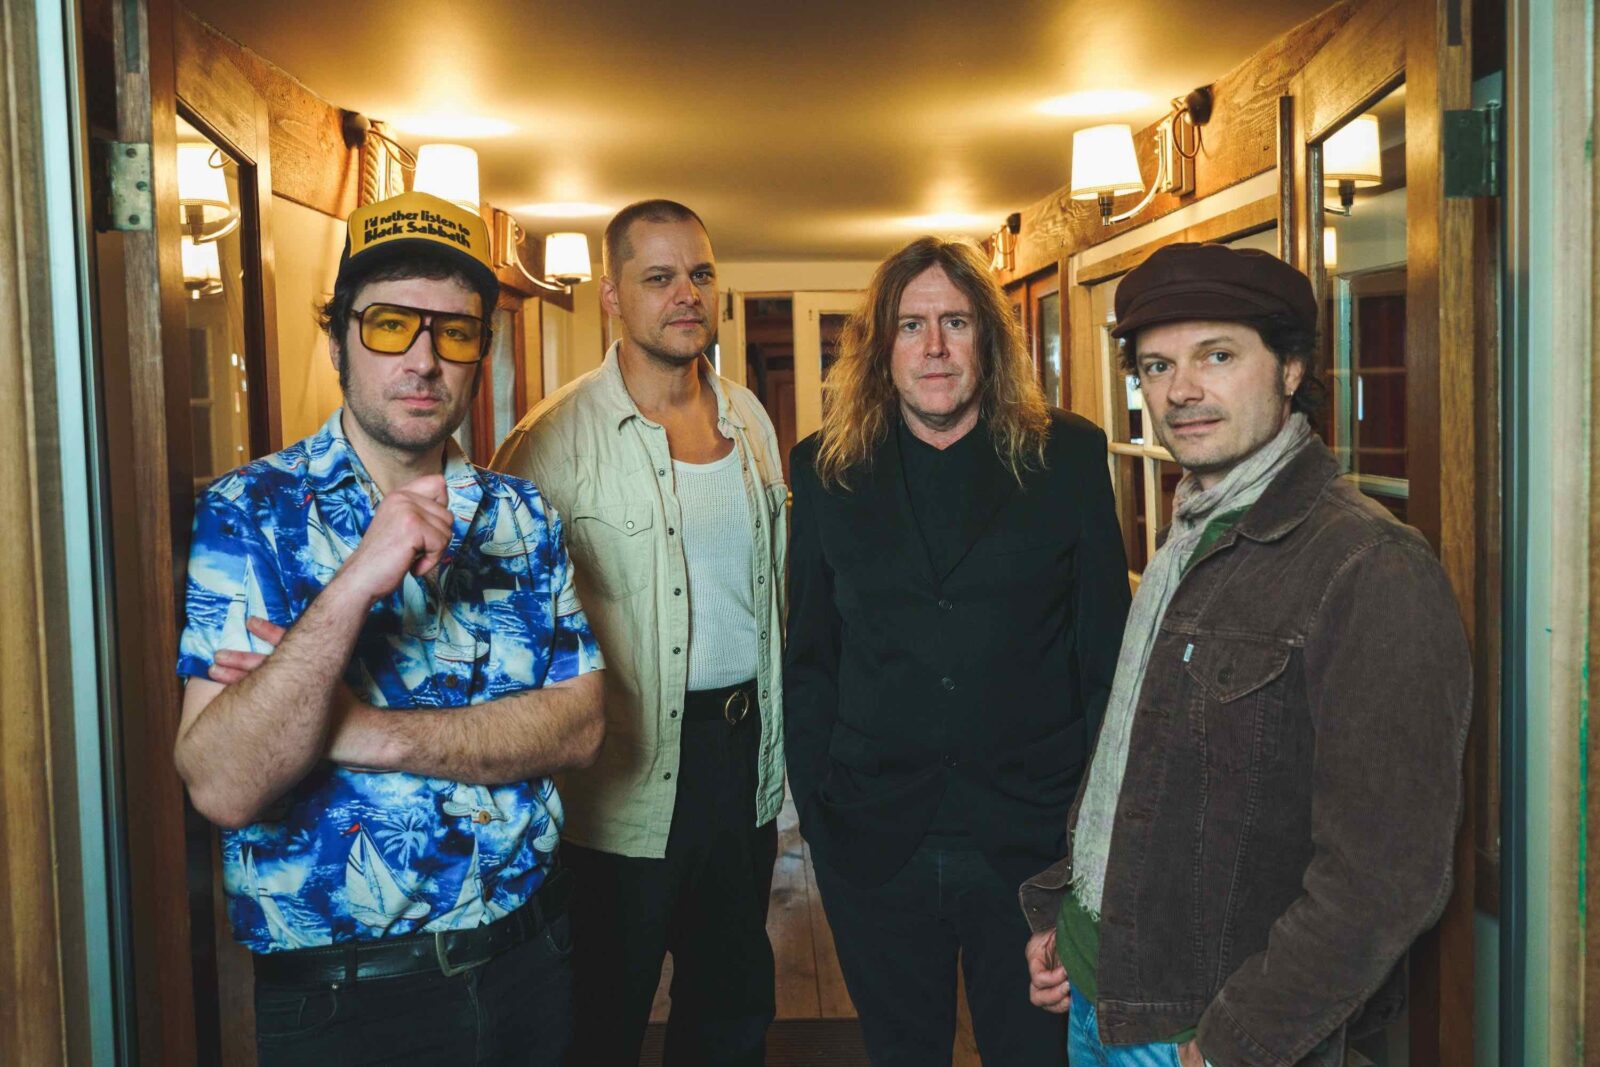 Photo of the four band members from left to right: Davey Lane, Mark Wilson, Kram, Darren Middleton.